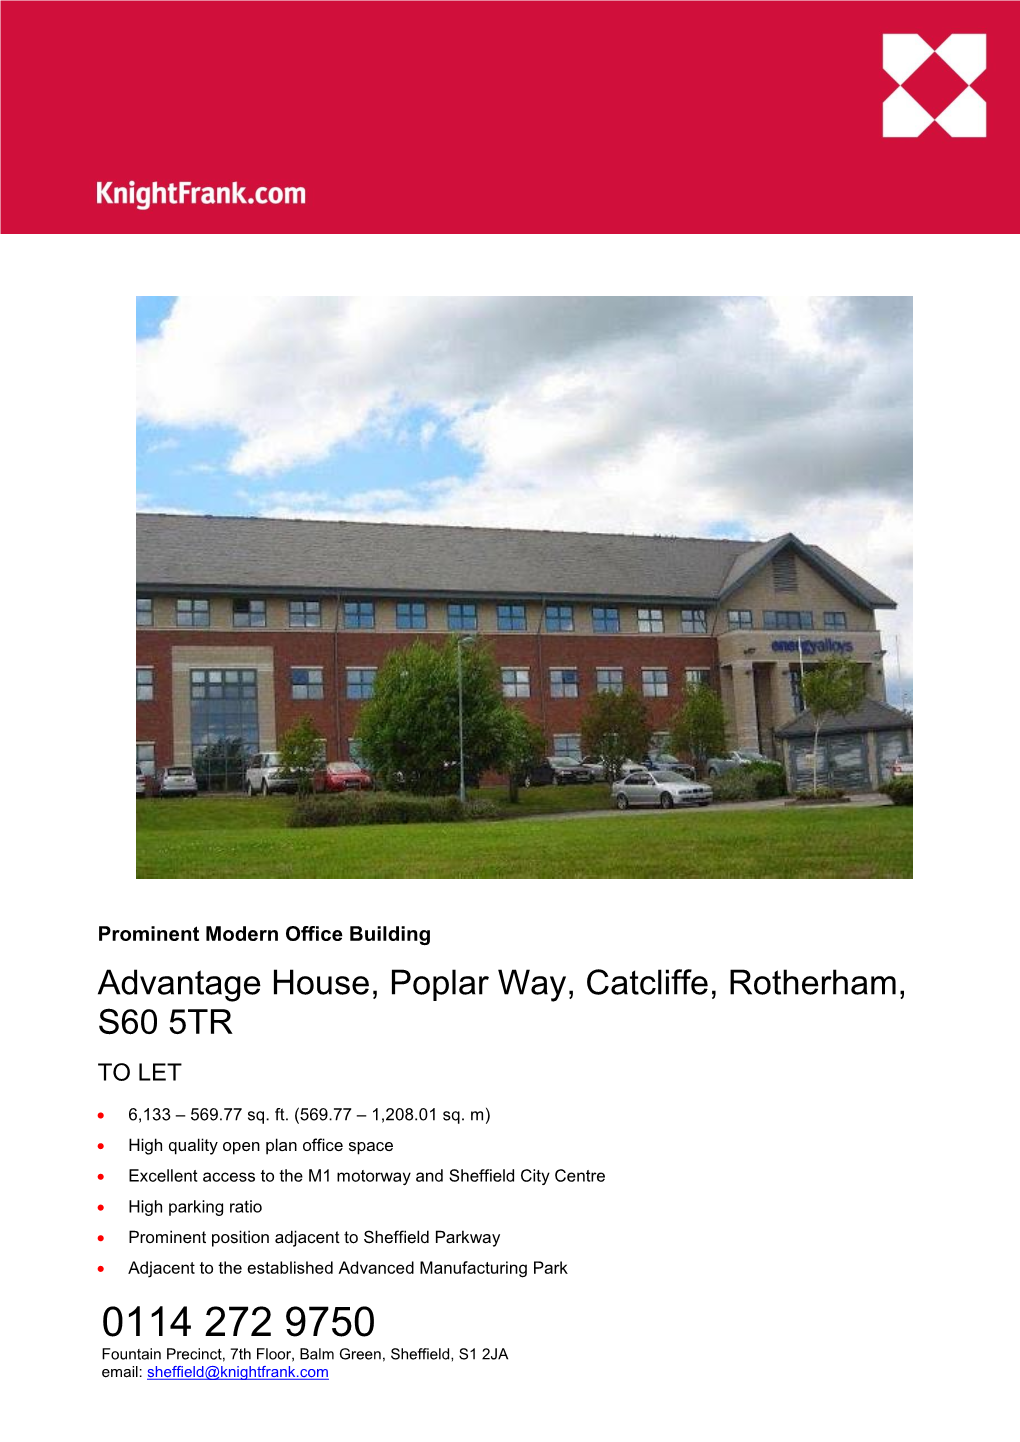 Advantage House, Poplar Way, Catcliffe, Rotherham, S60 5TR to LET